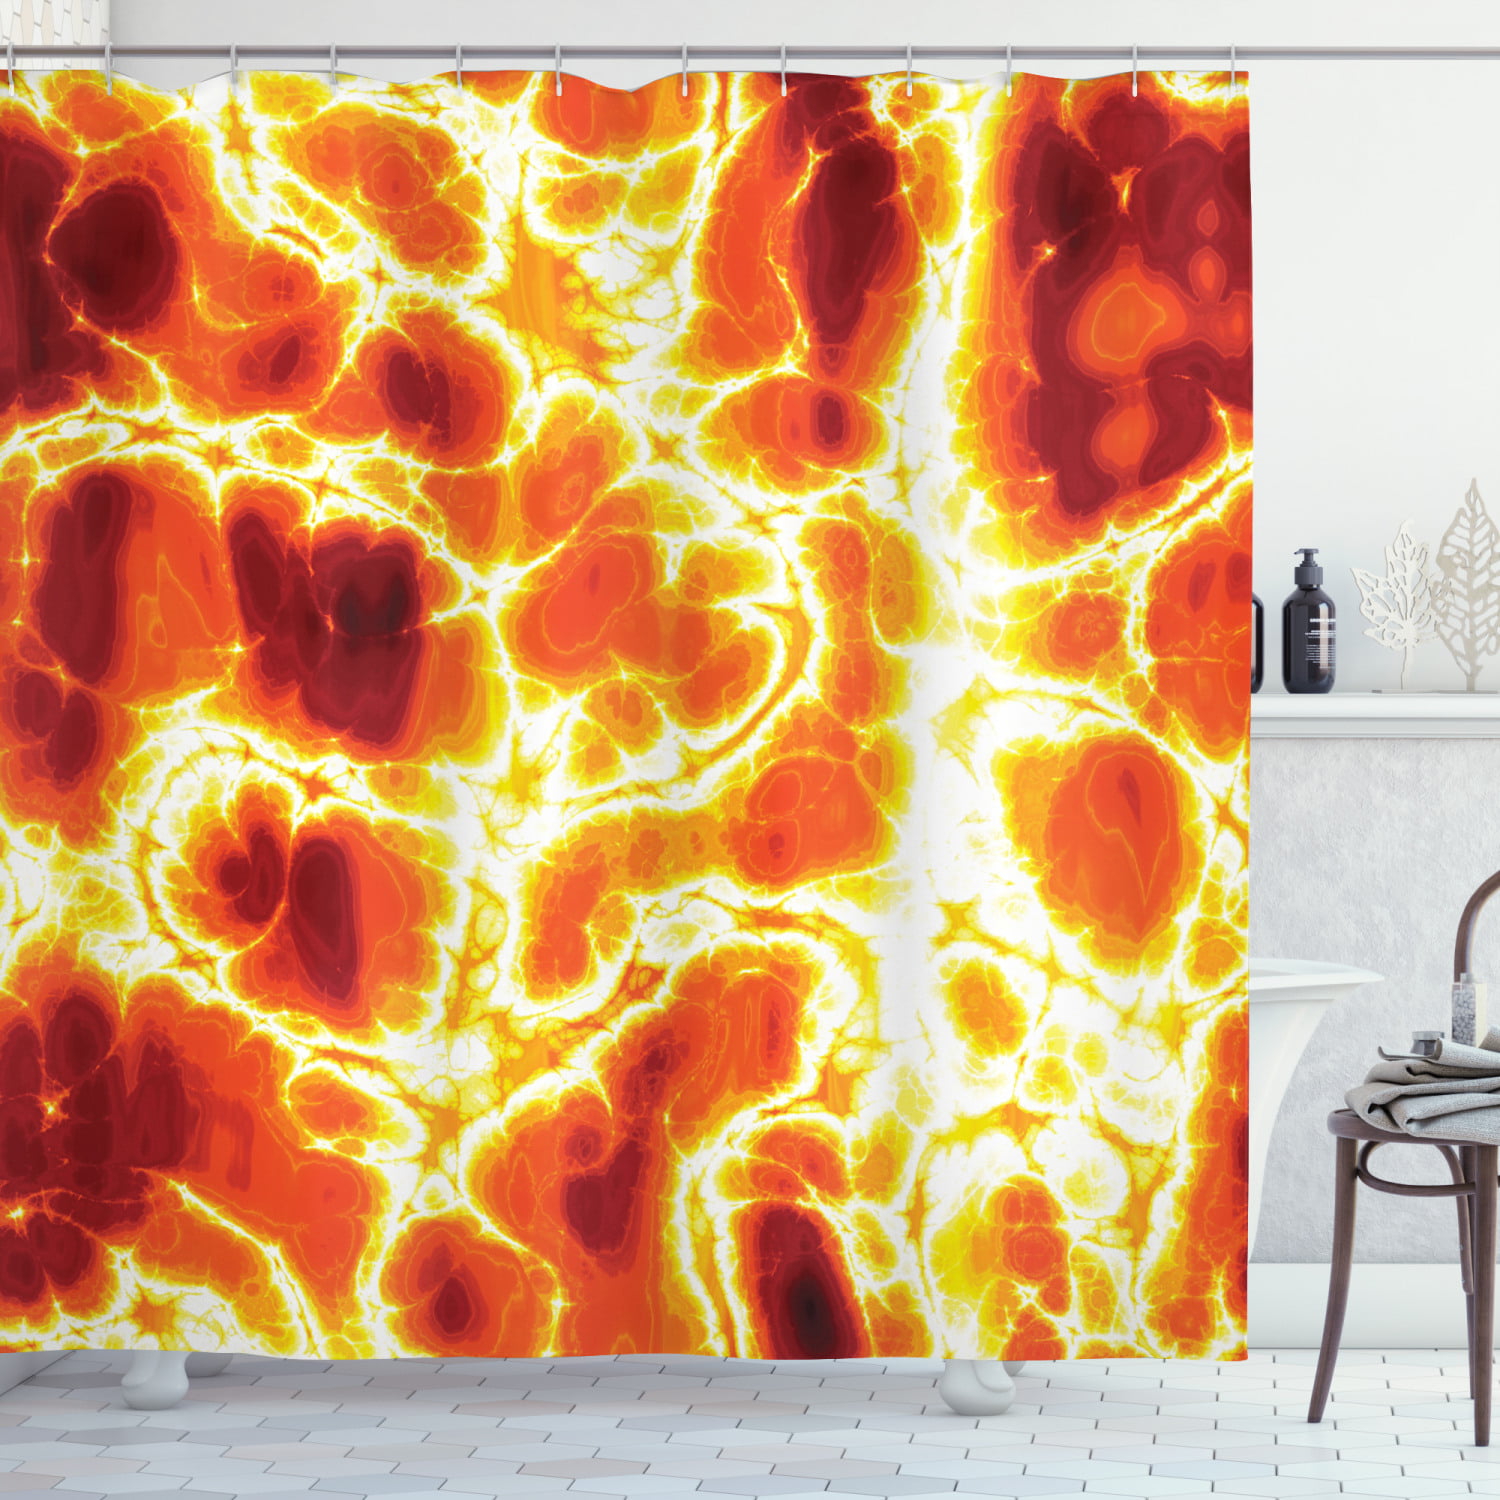 Orange Shower Curtain Hot Burning Lava Fire Print for Bathroom 